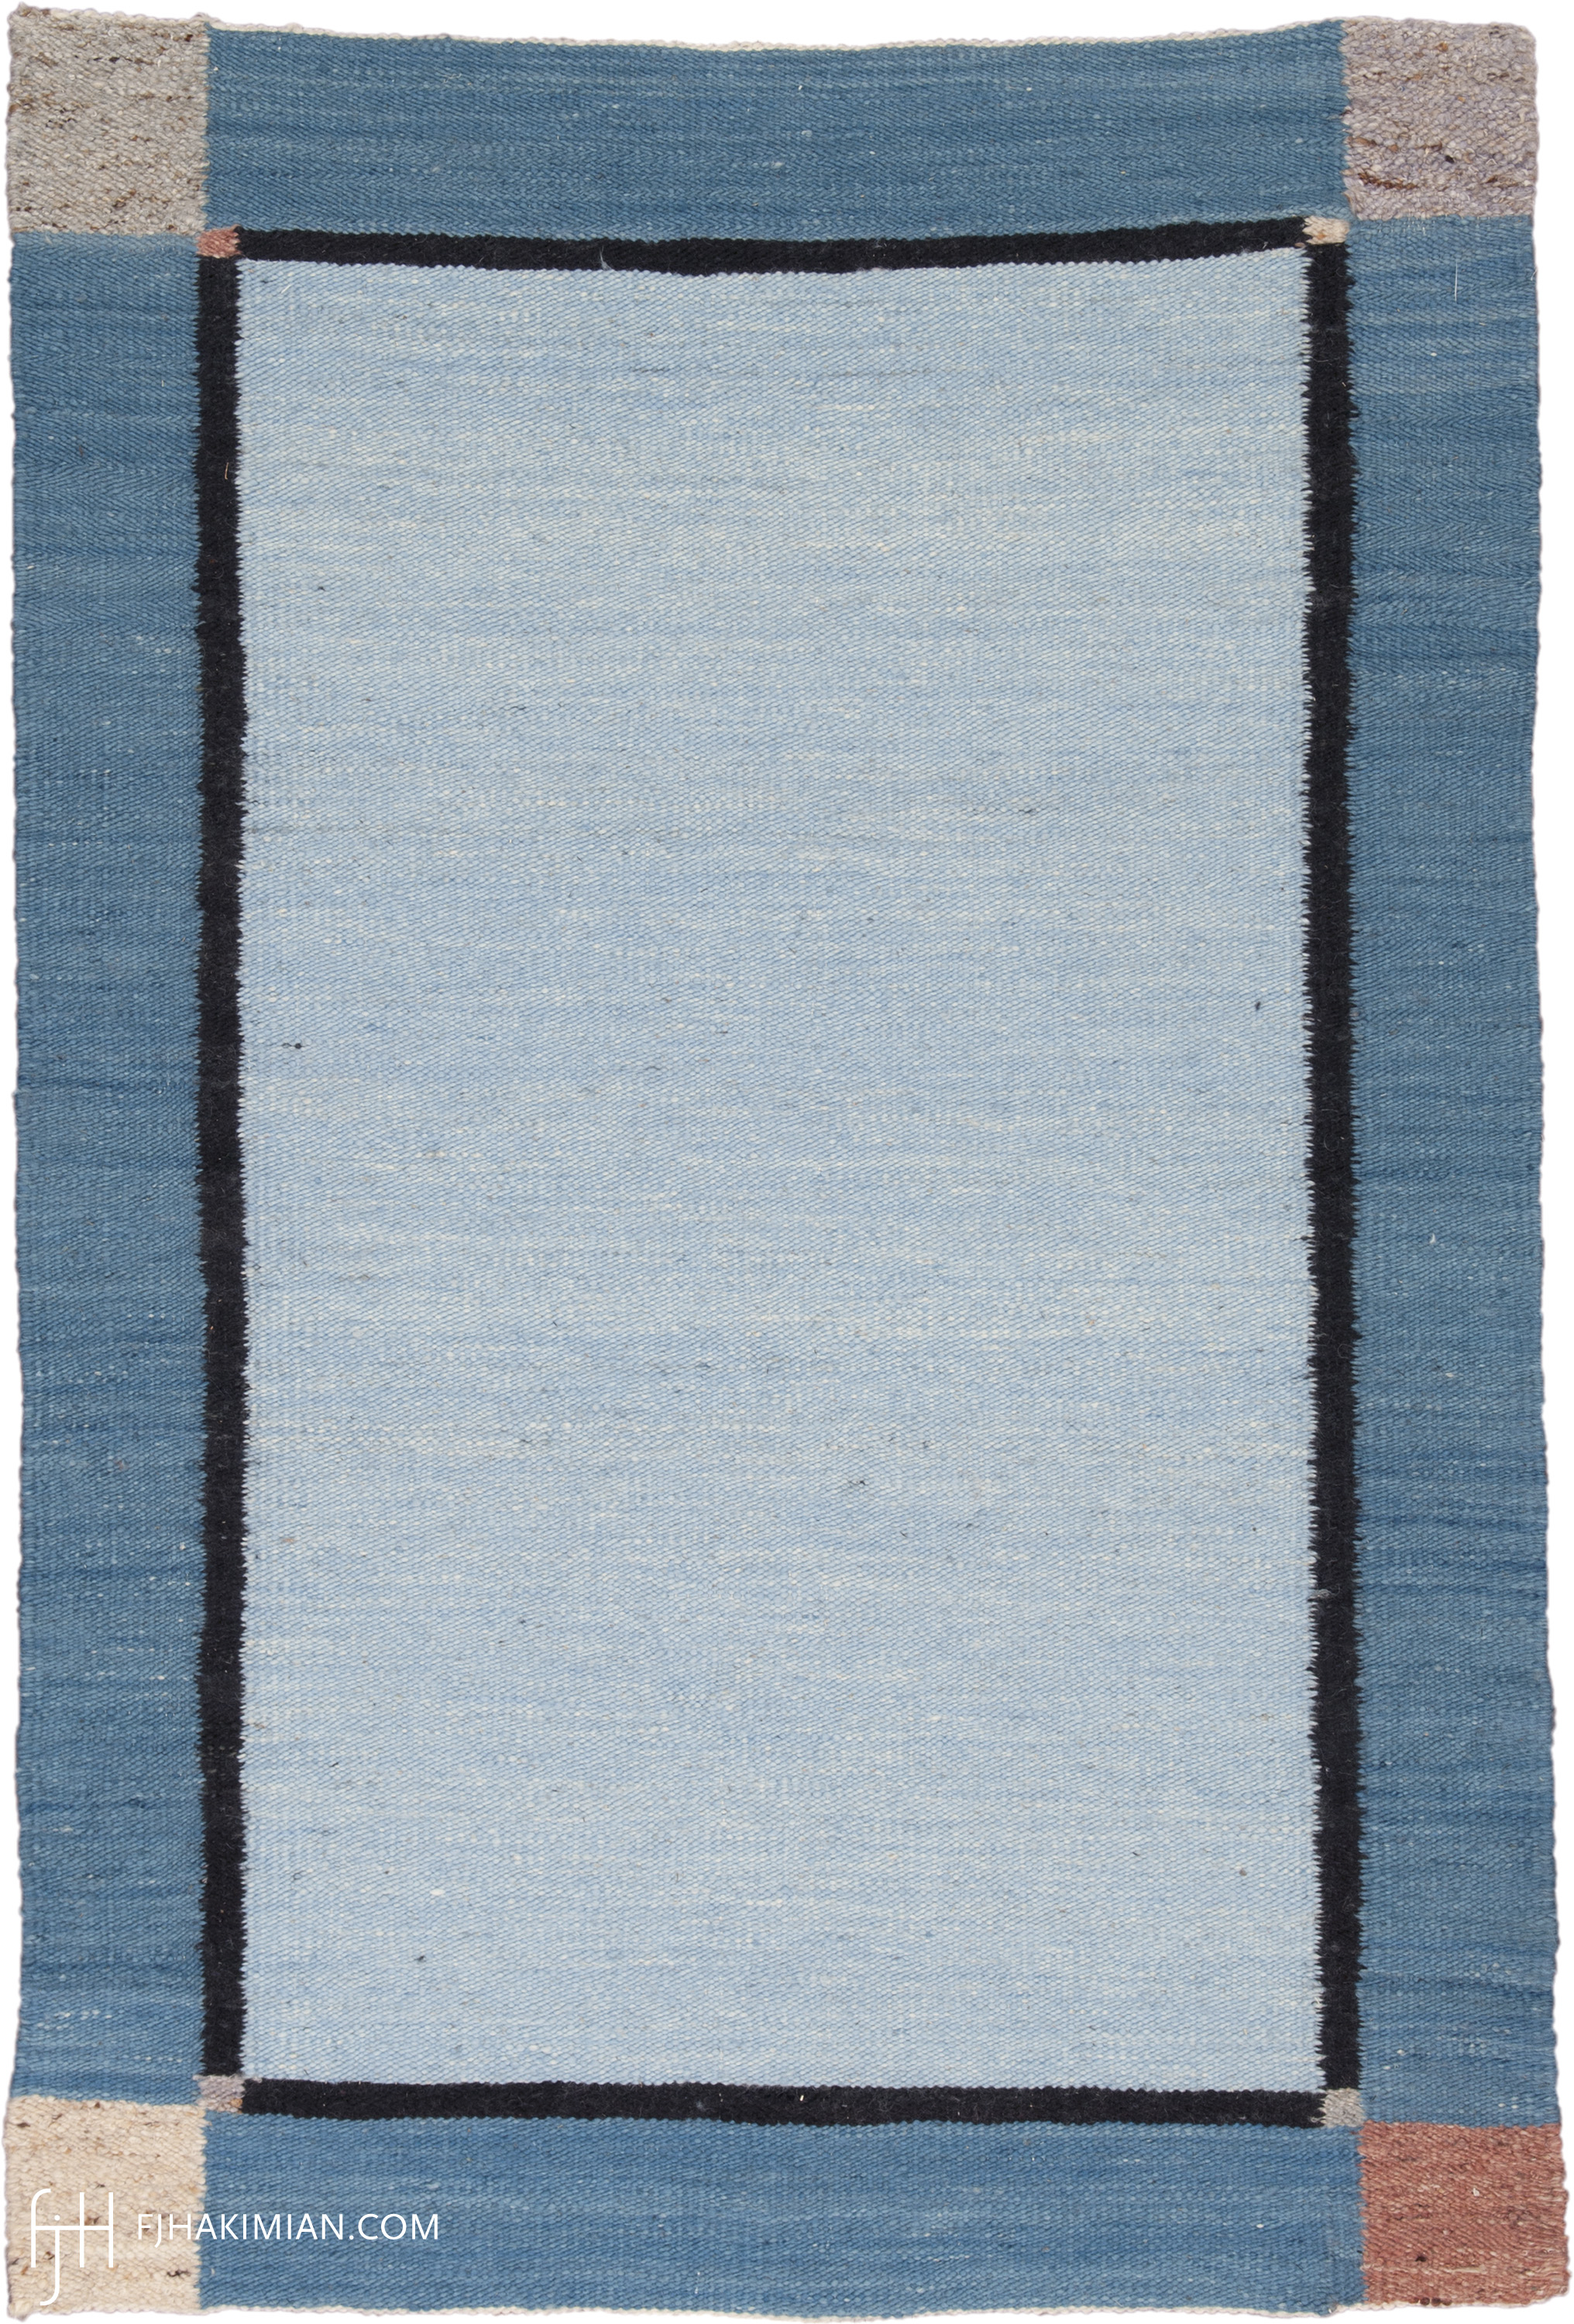 26585 | EBM-Squares Design | Custom Mohair Carpet | FJ Hakimian | Carpet Gallery in NYC